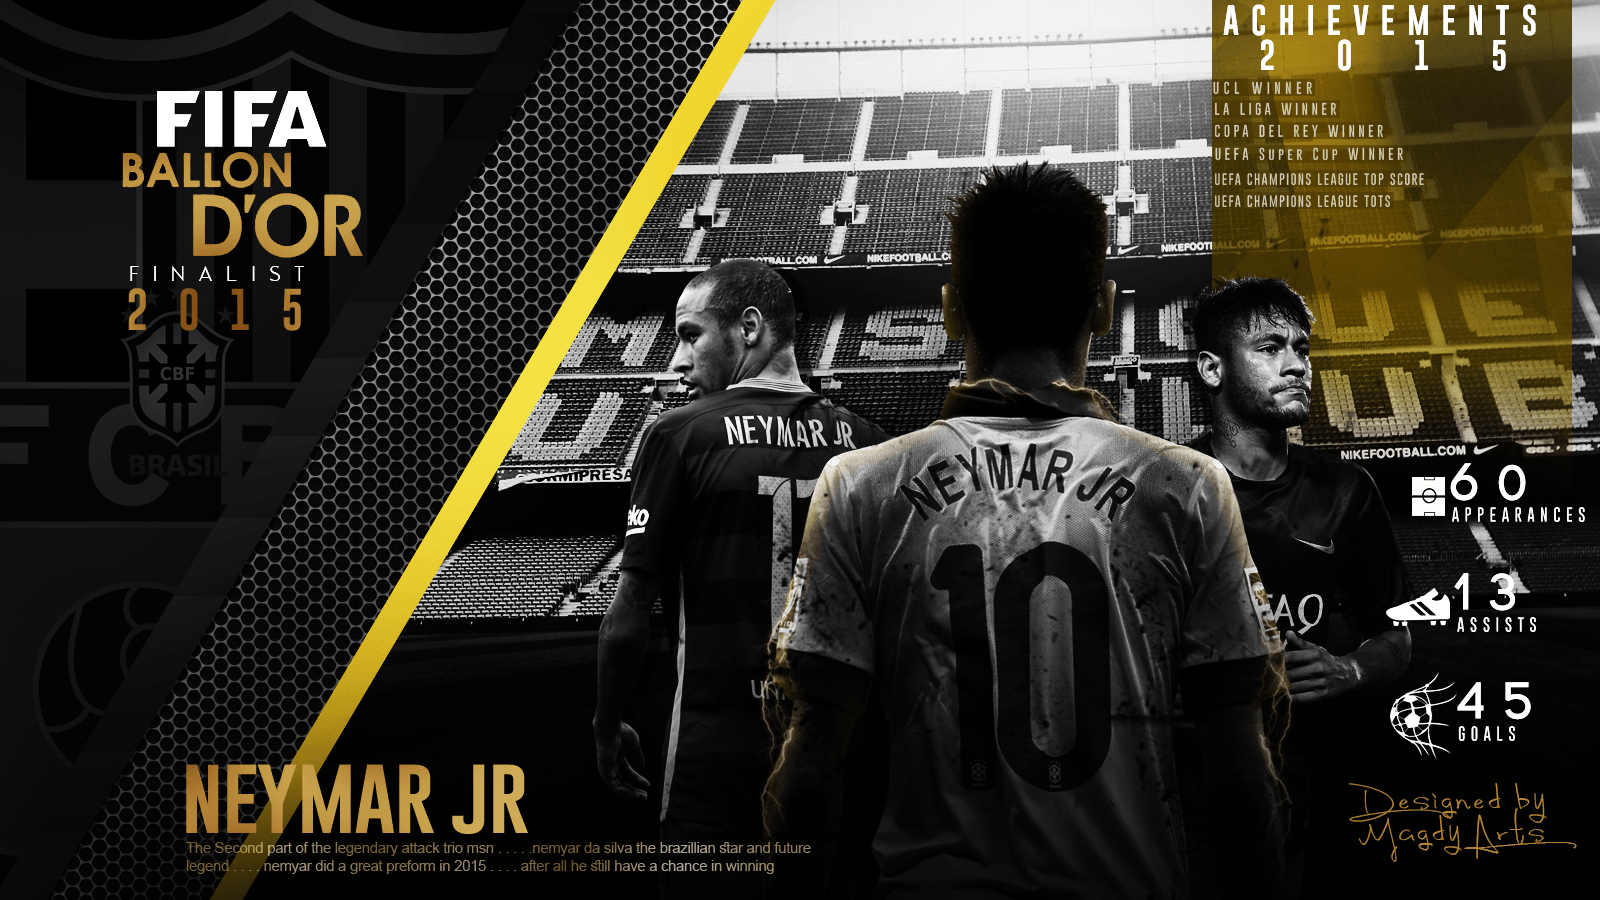 FIFA Ballon D'Or 2015 Finalist: Neymar